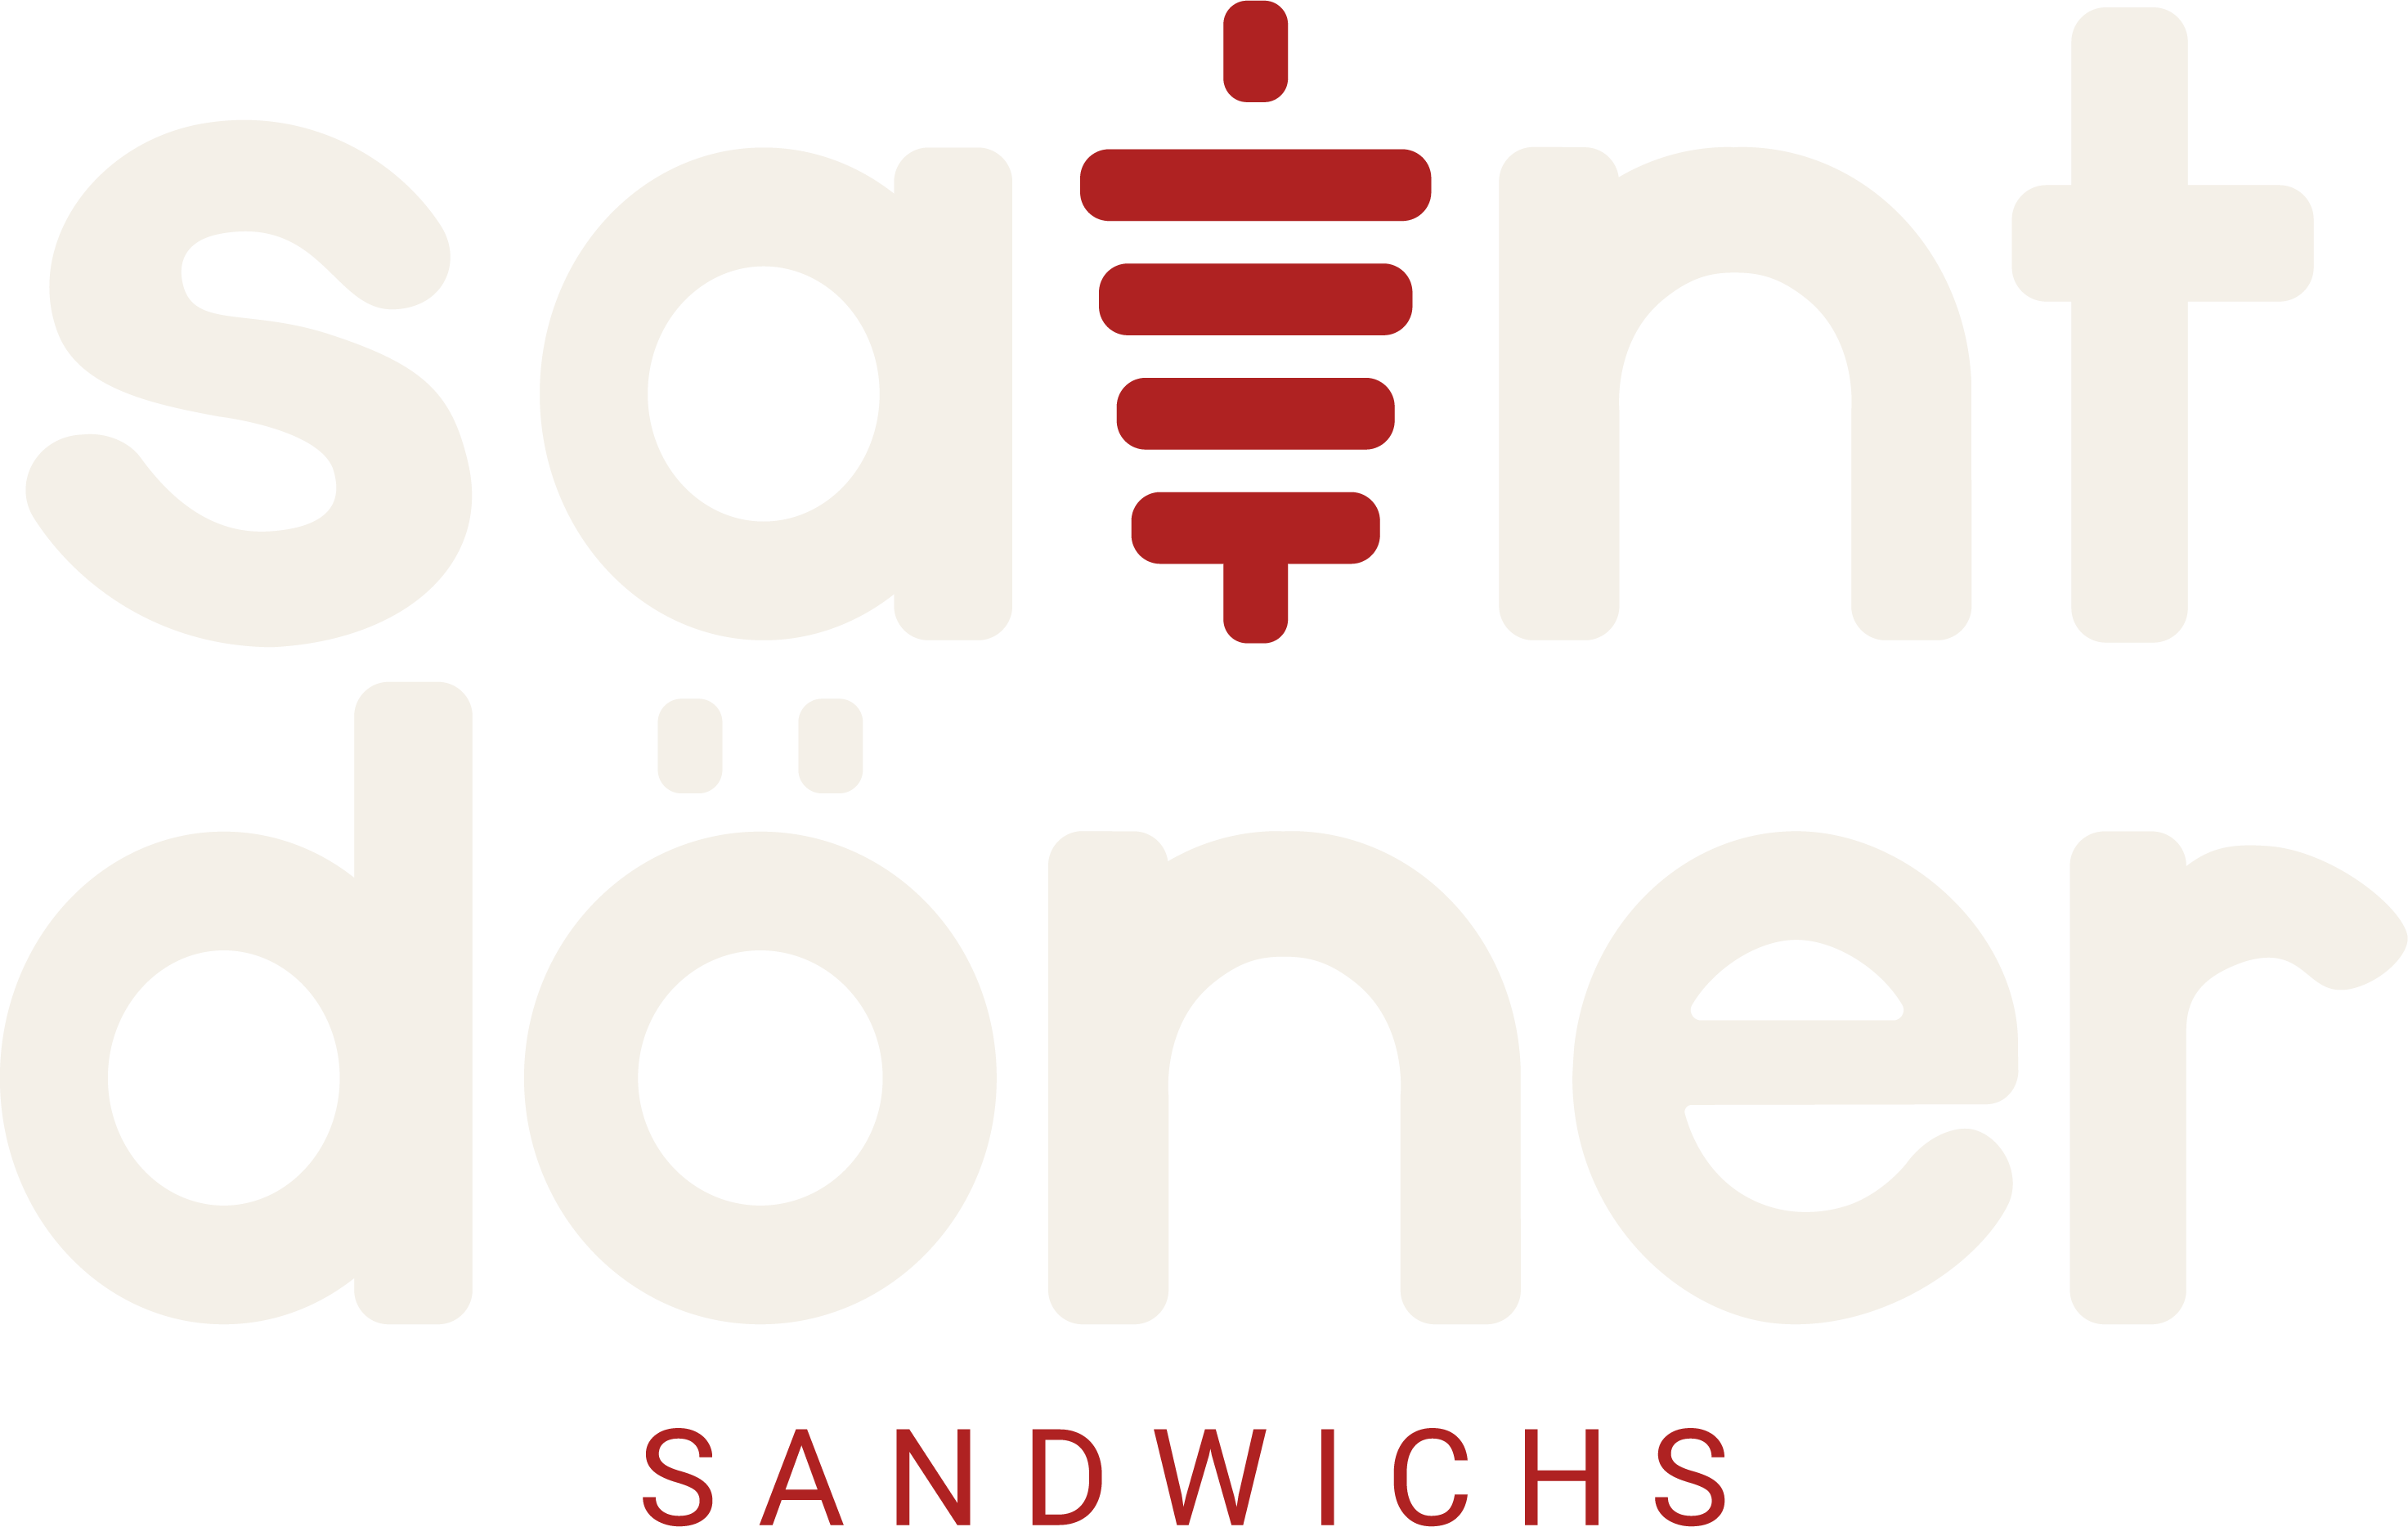 Saint Döner Sandwichs